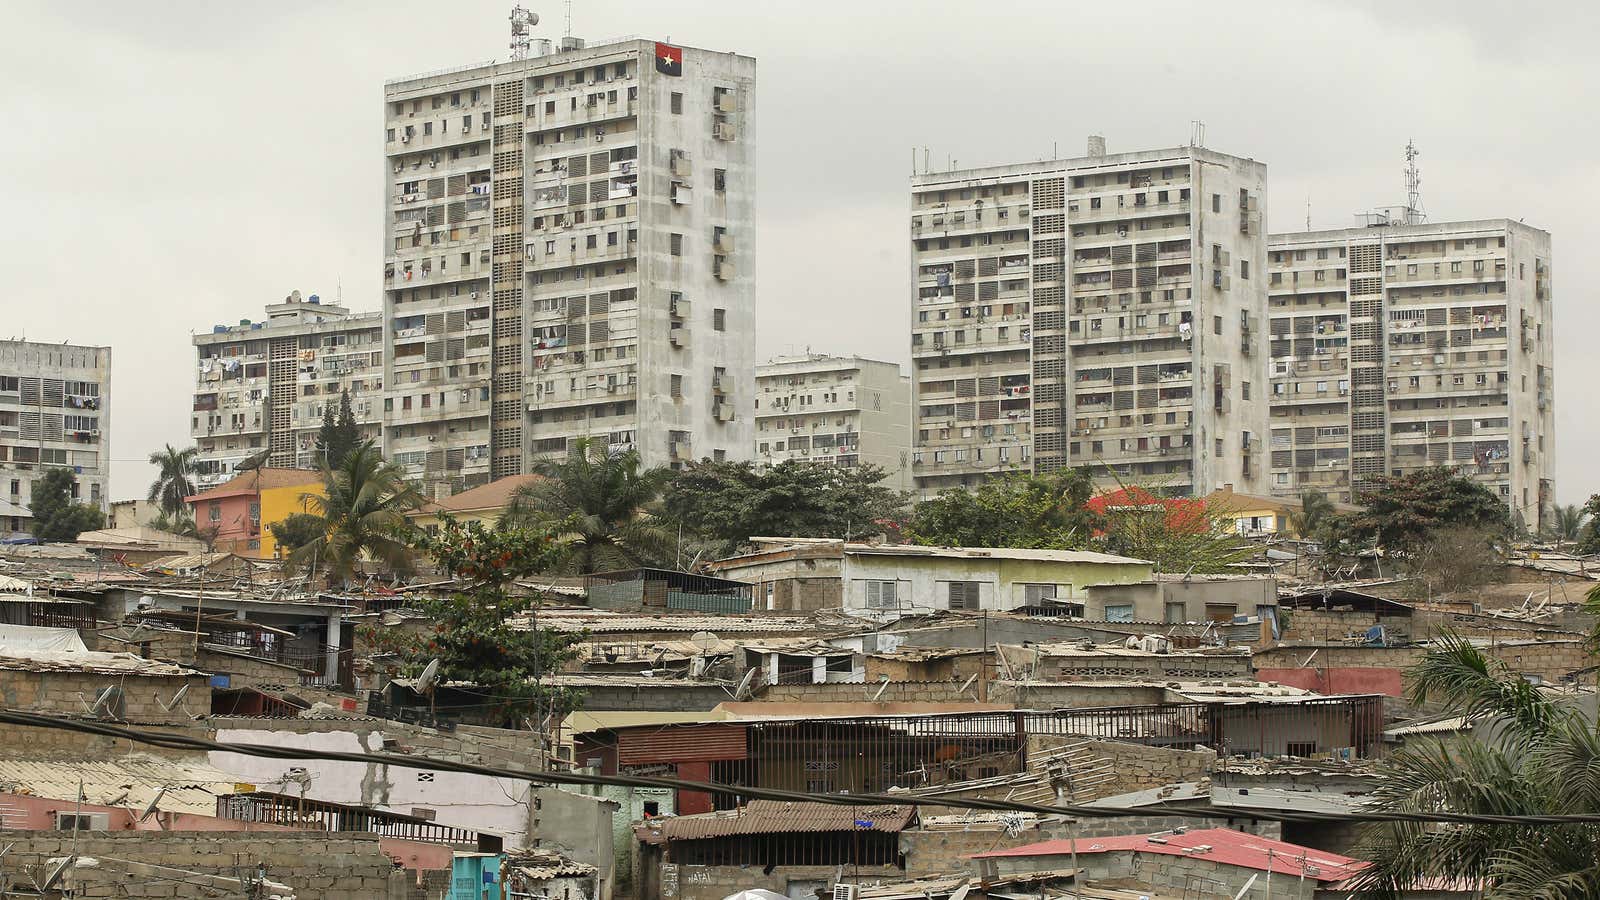 HIgh rise buildings in Luanda loom over poorer informal settlements.